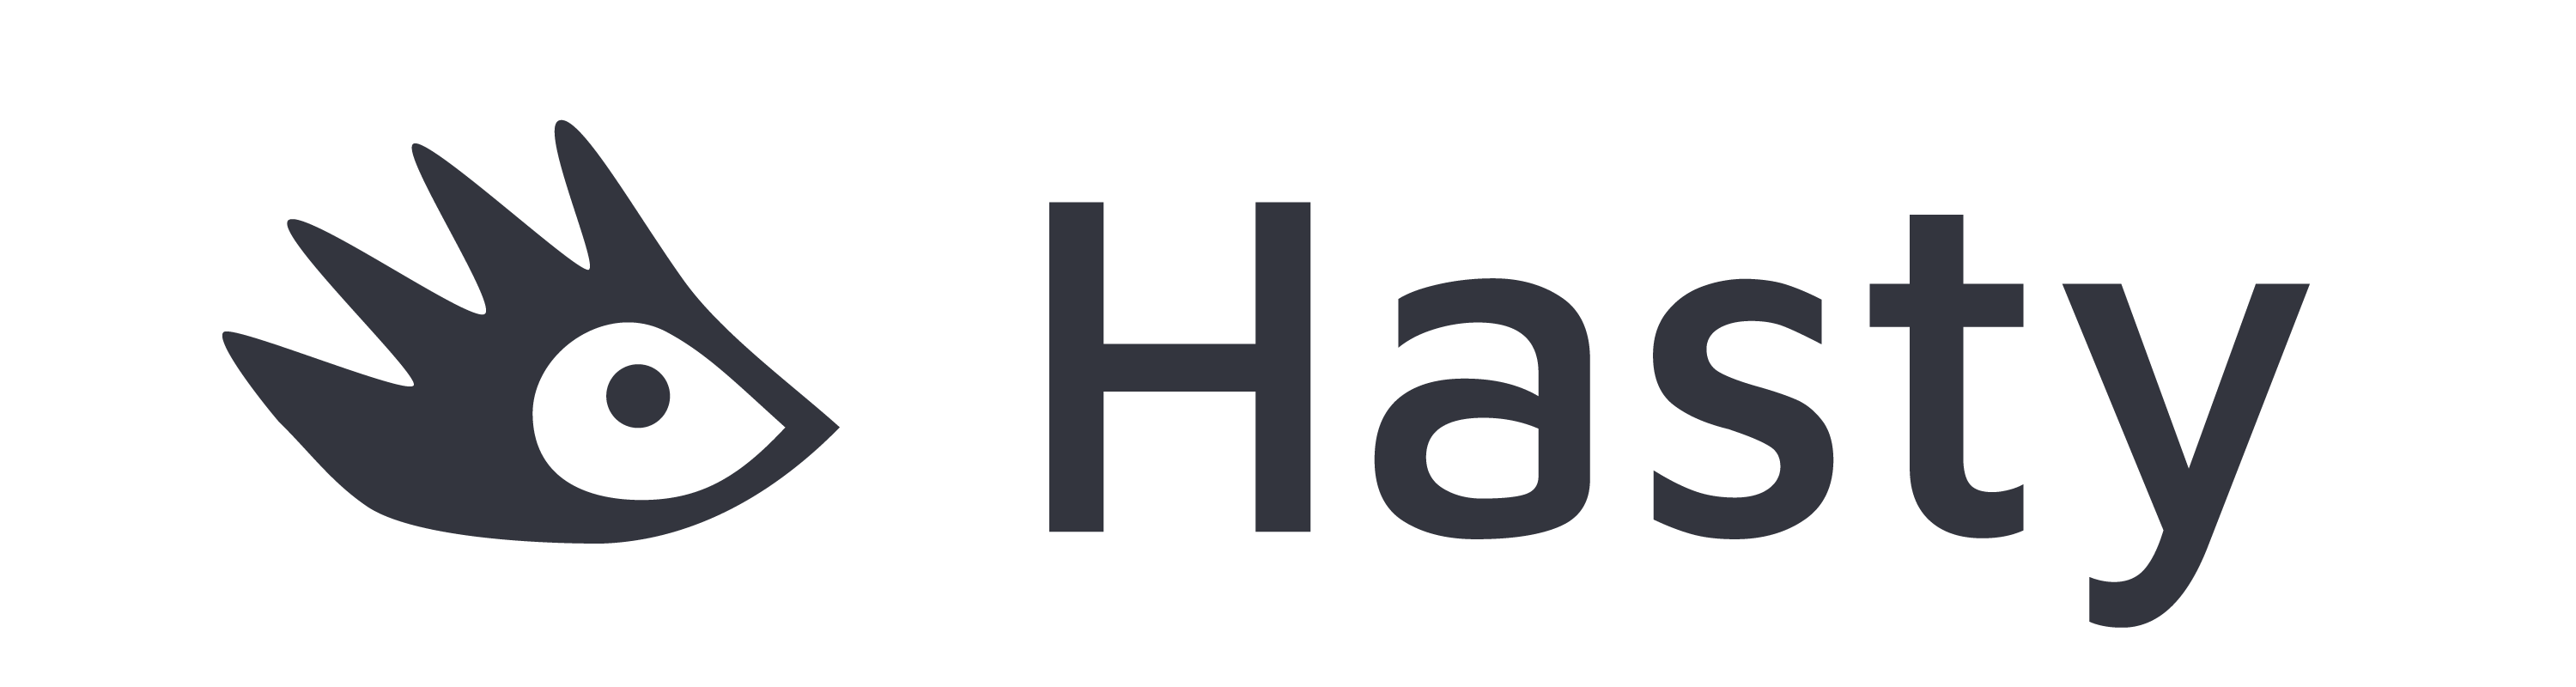 Hasty GmbH